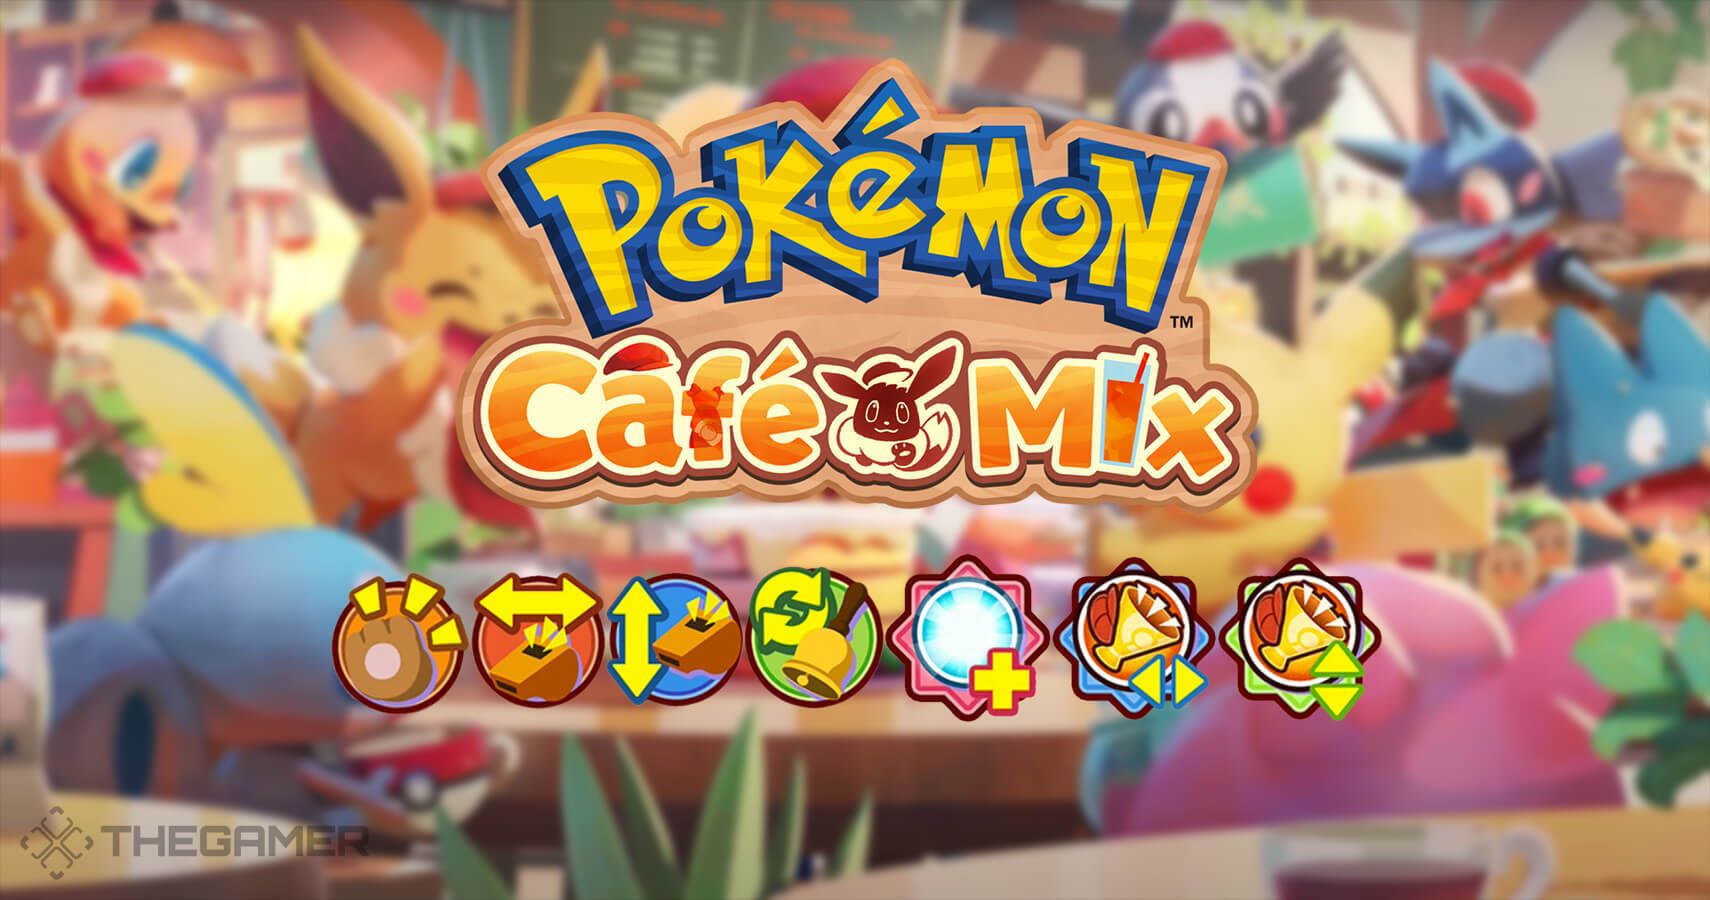 pokemon cafe mix data transfer